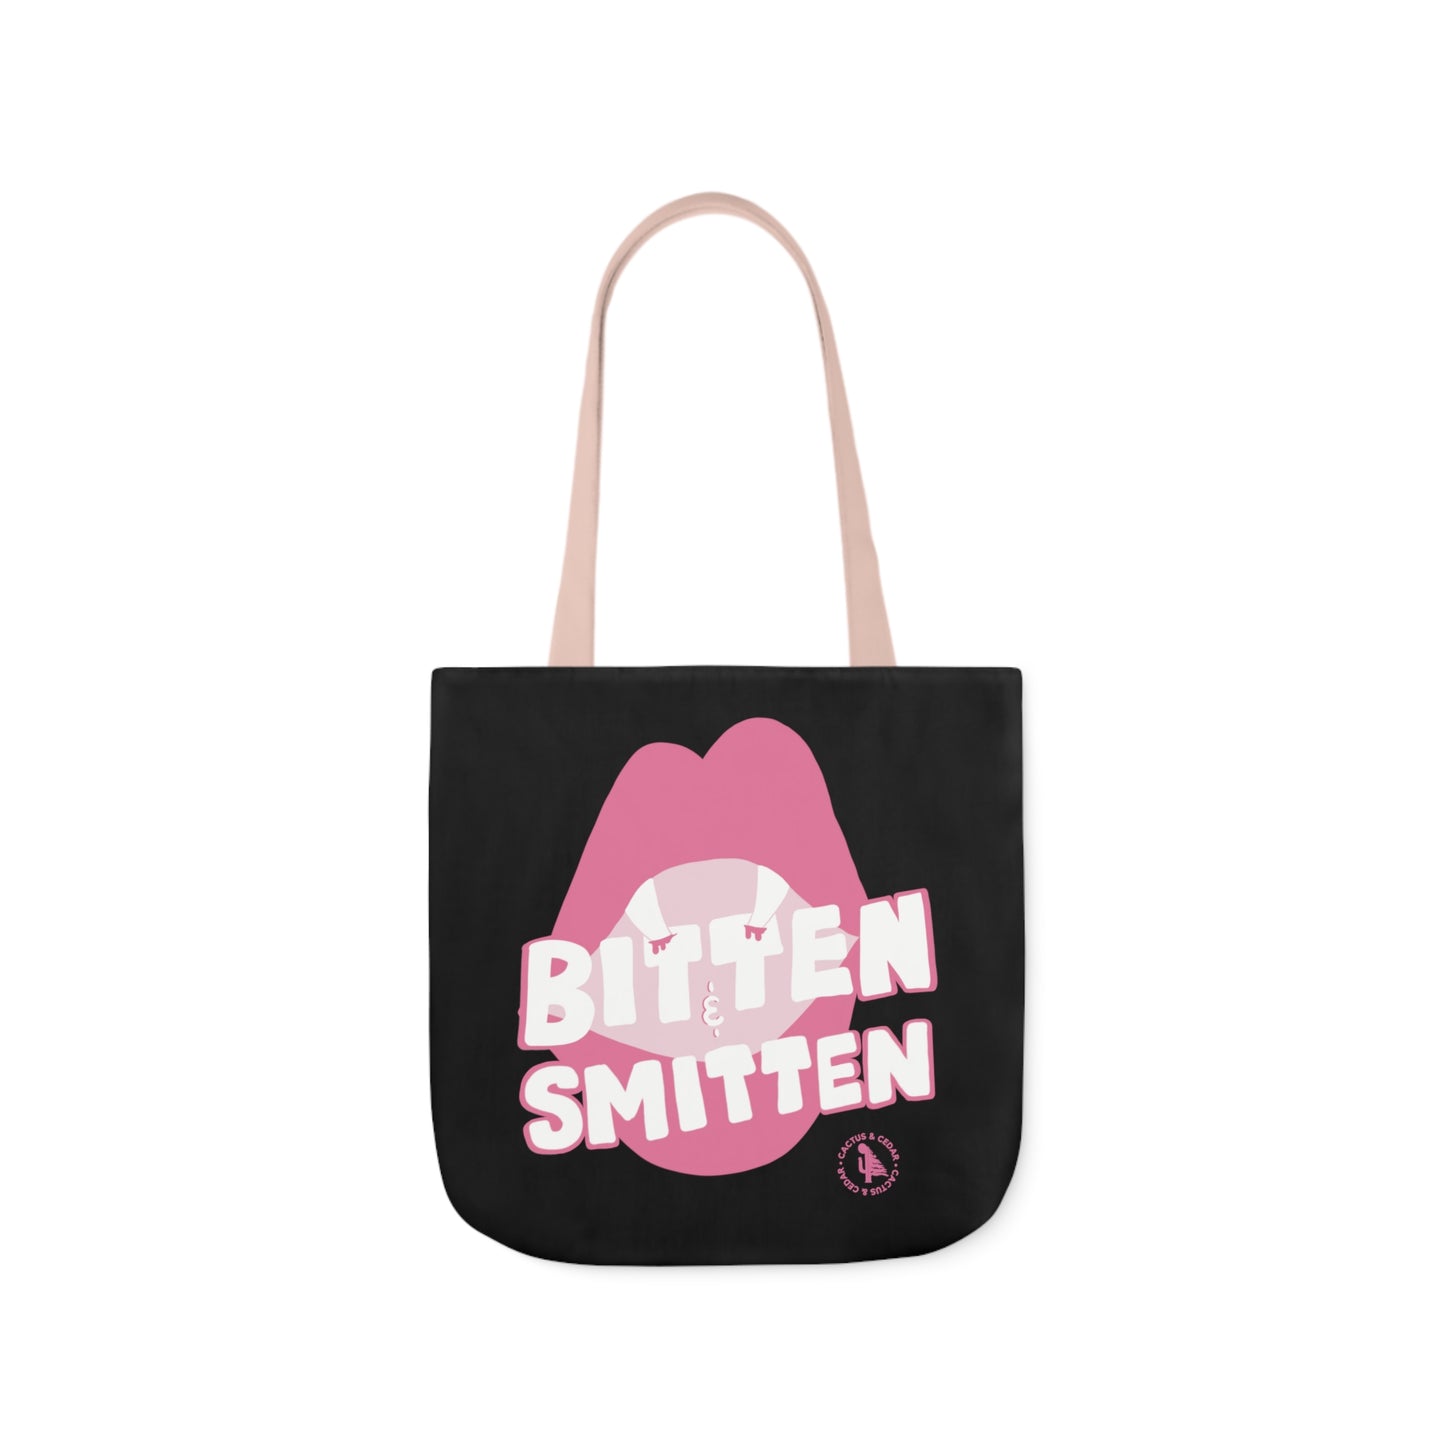 Bitten & Smitten Tote Bag / Pink Vamp Tote Bag / Pink Halloween Tote Bag / Polyester Canvas Tote Bag